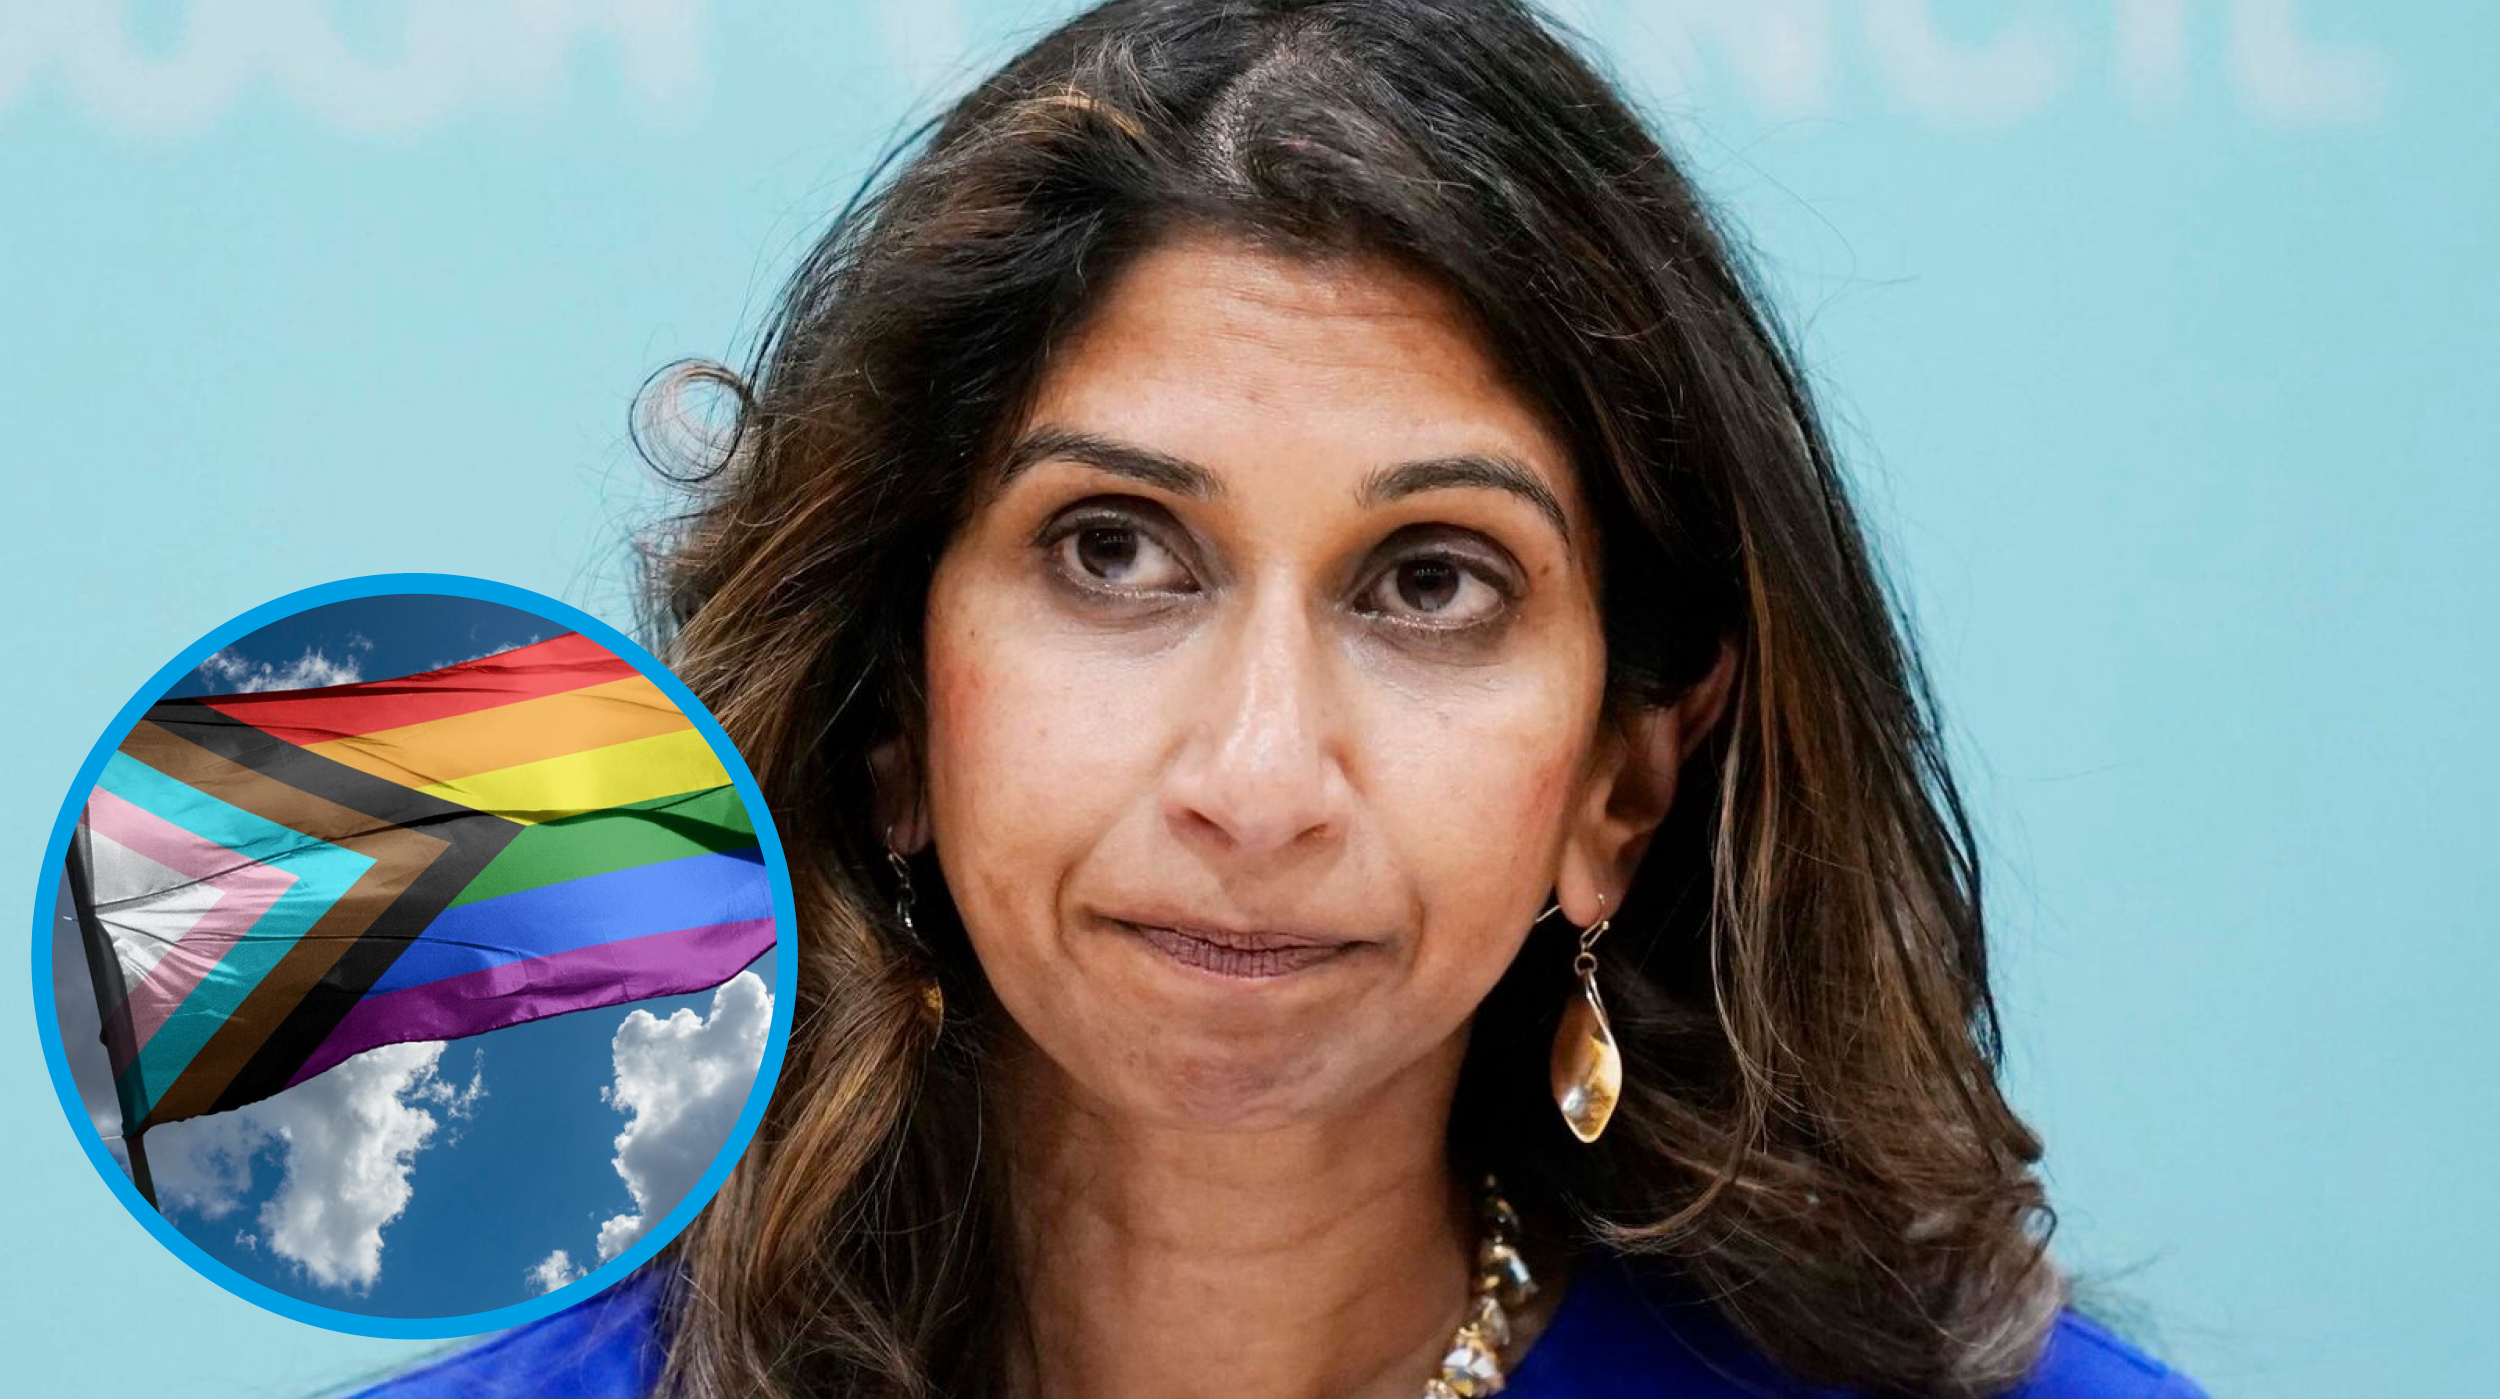 Suella Braverman faces backlash after describing Progress Pride flag as “monstrous”